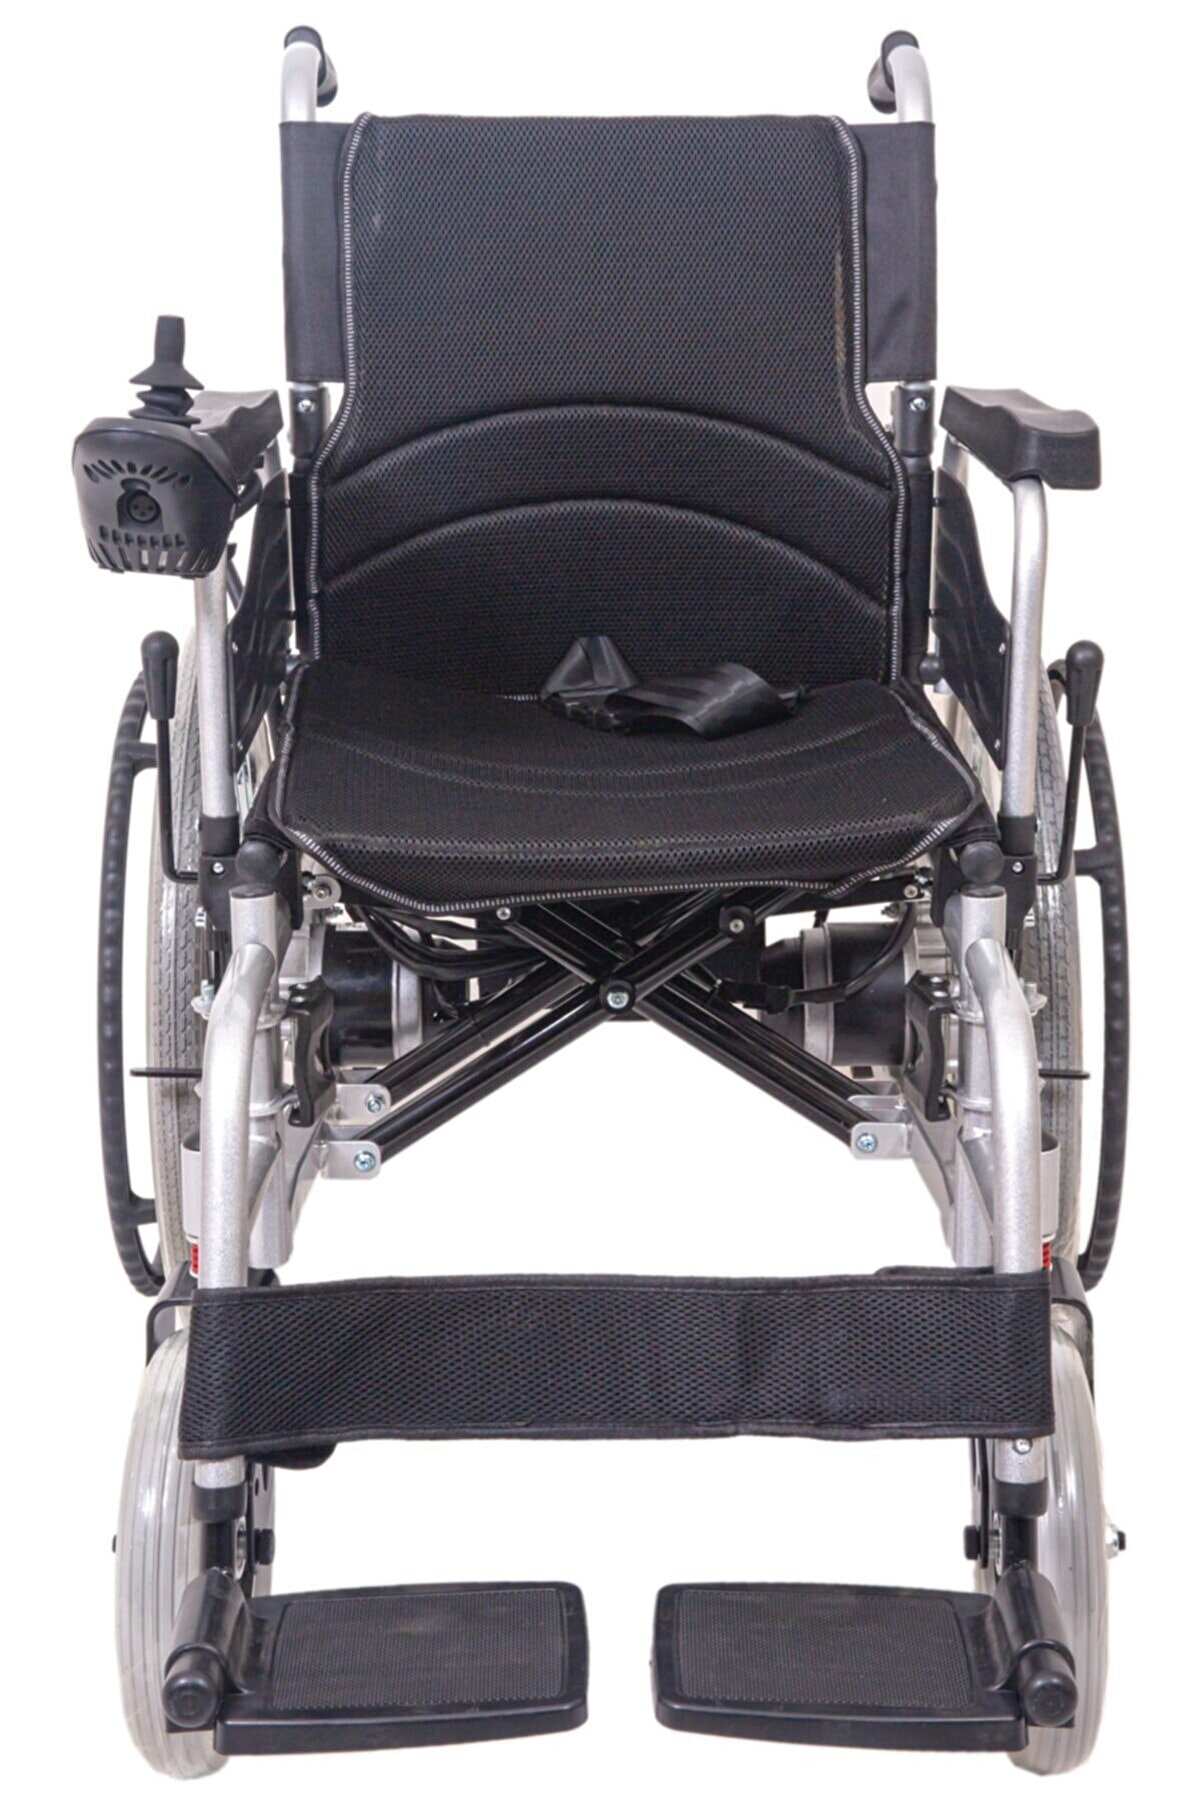 FUHASSAN Yüksek Performans Katlanabilir Tekerlekli Akülü Sandalye (fh 904 Sport)